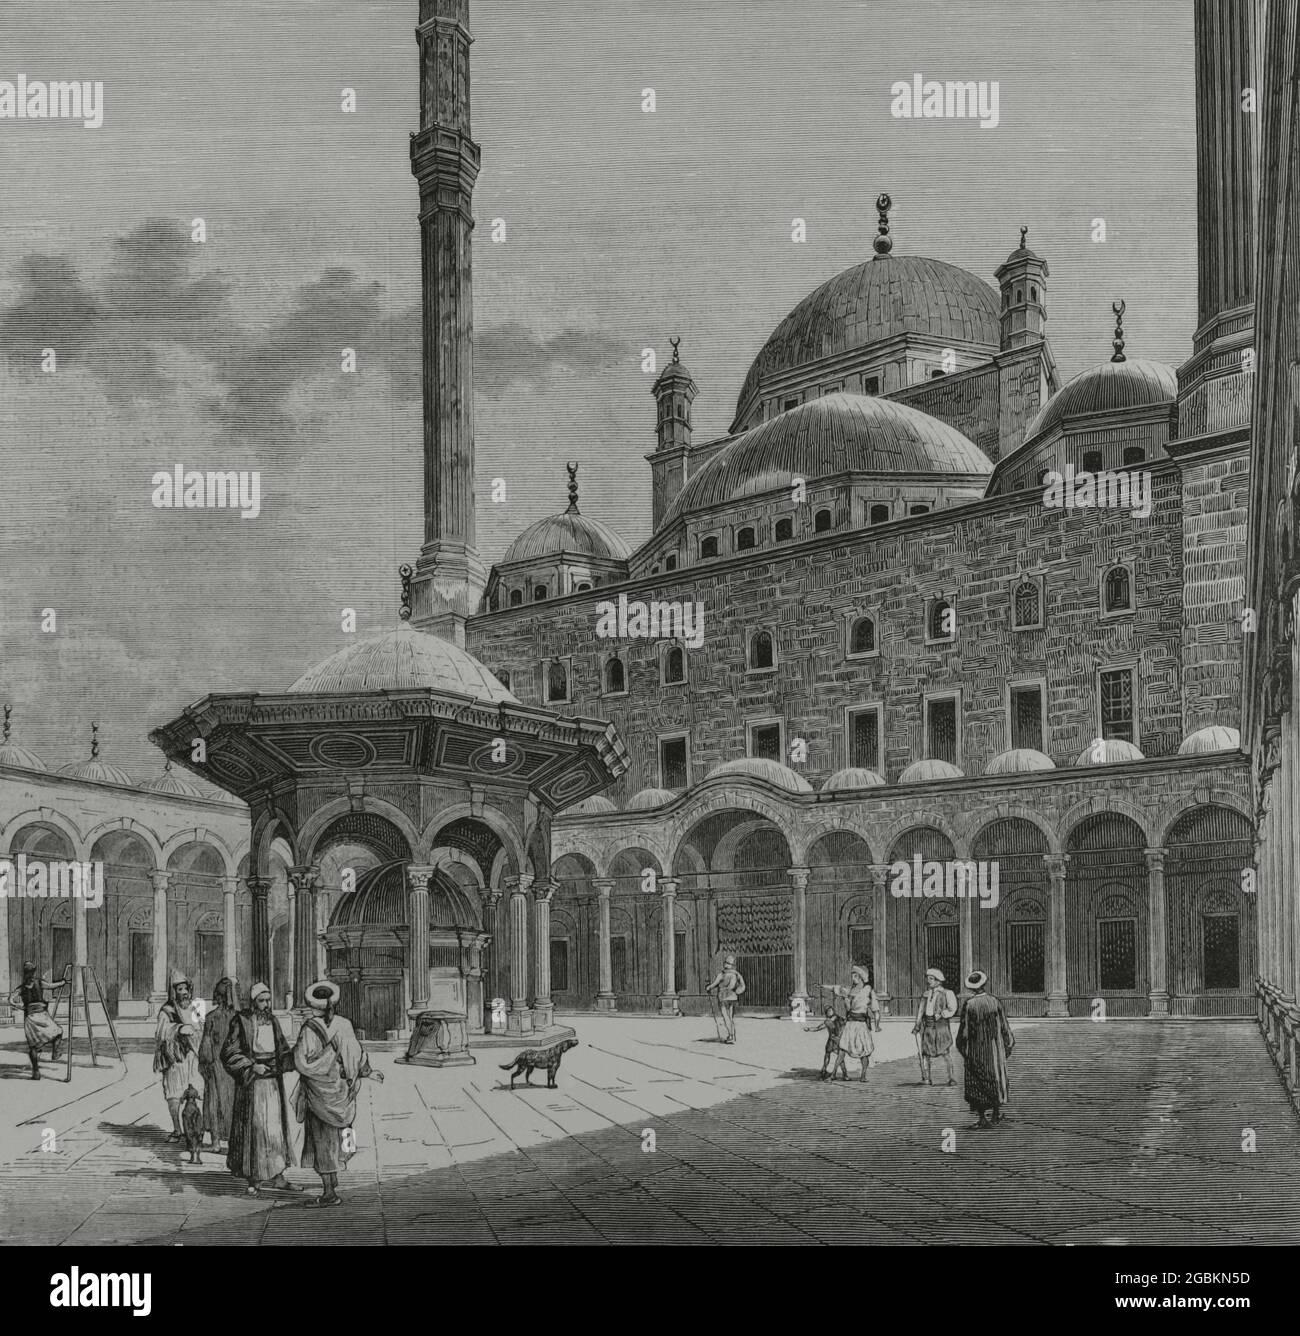 Egypt, Cairo. Courtyard and ablution fountain in the Mosque-Madrasa of Sultan Hassan. Engraving. La Ilustración Española y Americana, 1882. Stock Photo